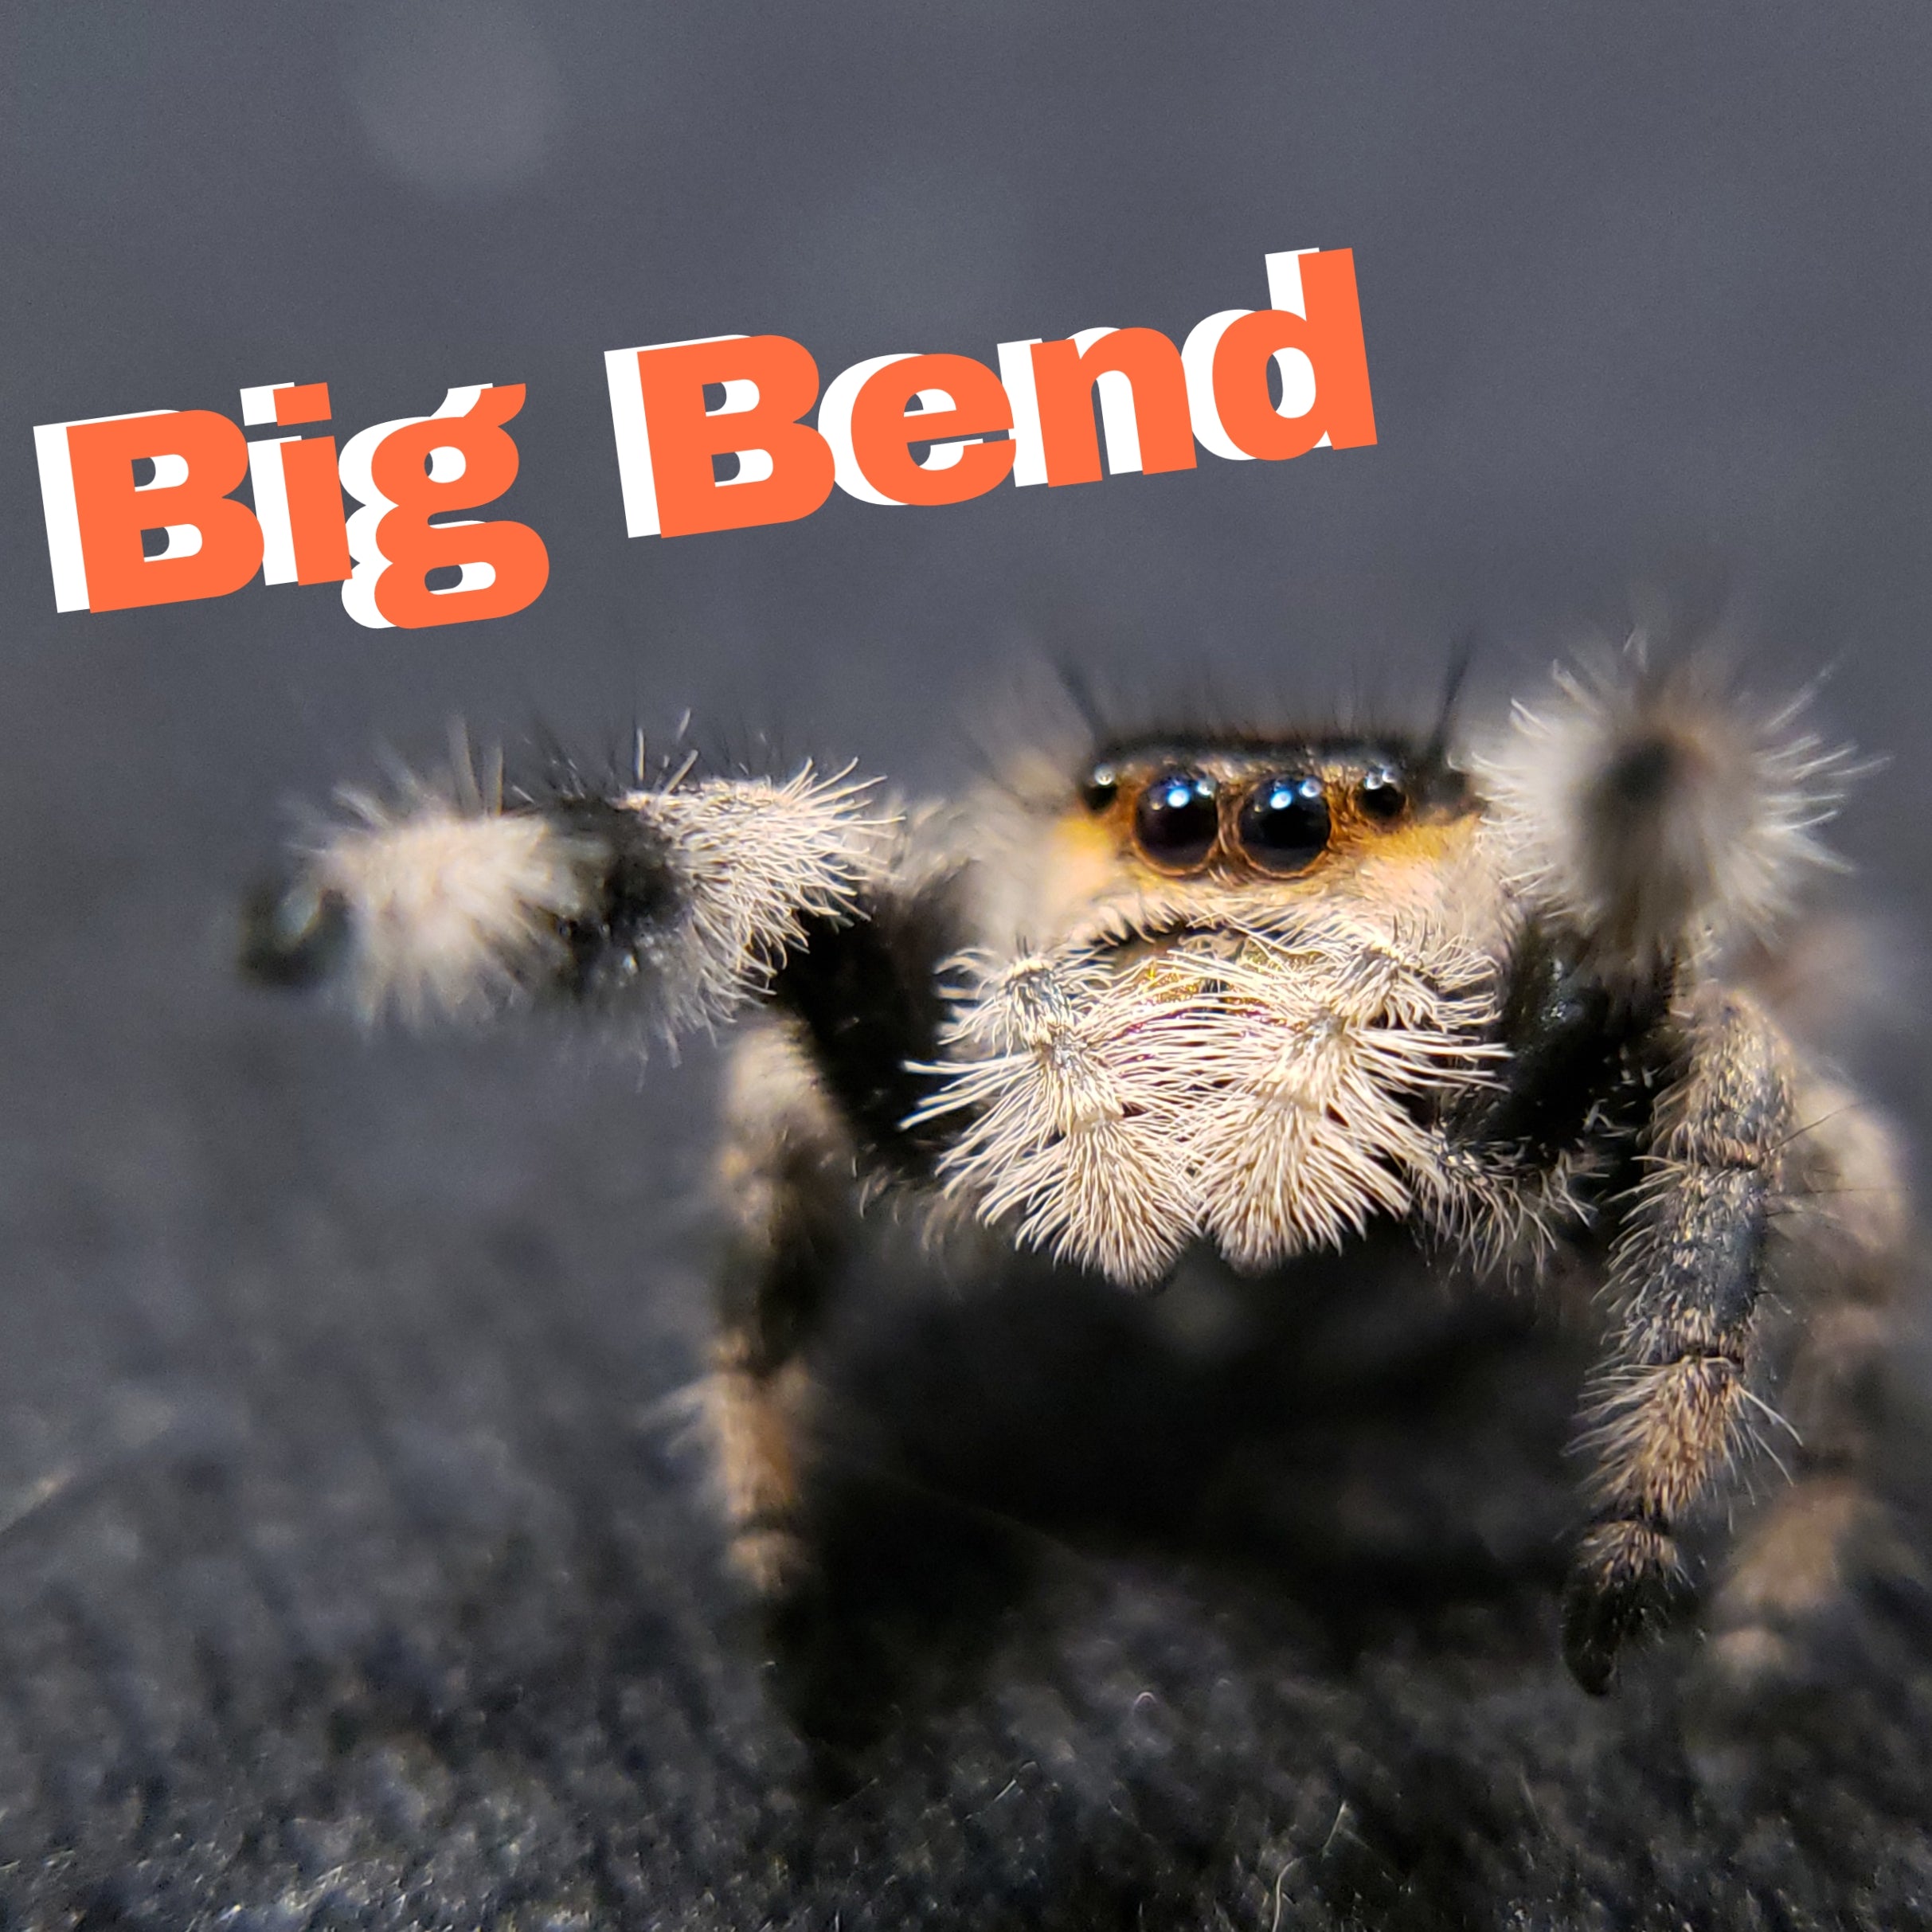 Audax Jumping Spider (Big Bend Varitation) - Jumping Spiders For Sale - Spiders Source - #1 Regal Jumping Spider Store